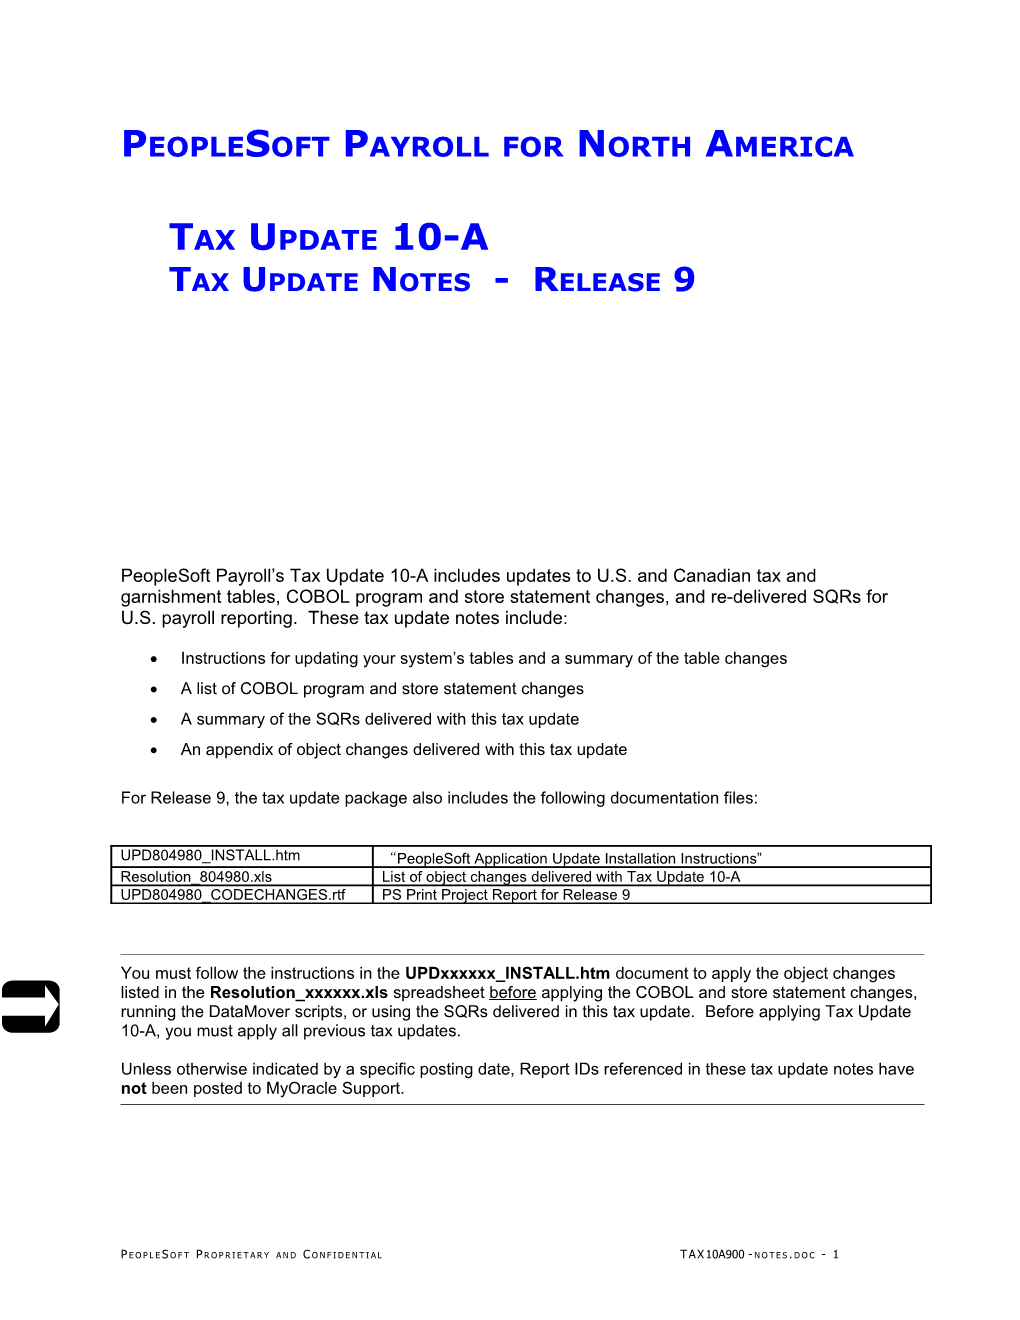 9.00 - Peoplesoft Payroll Tax Update 10-A